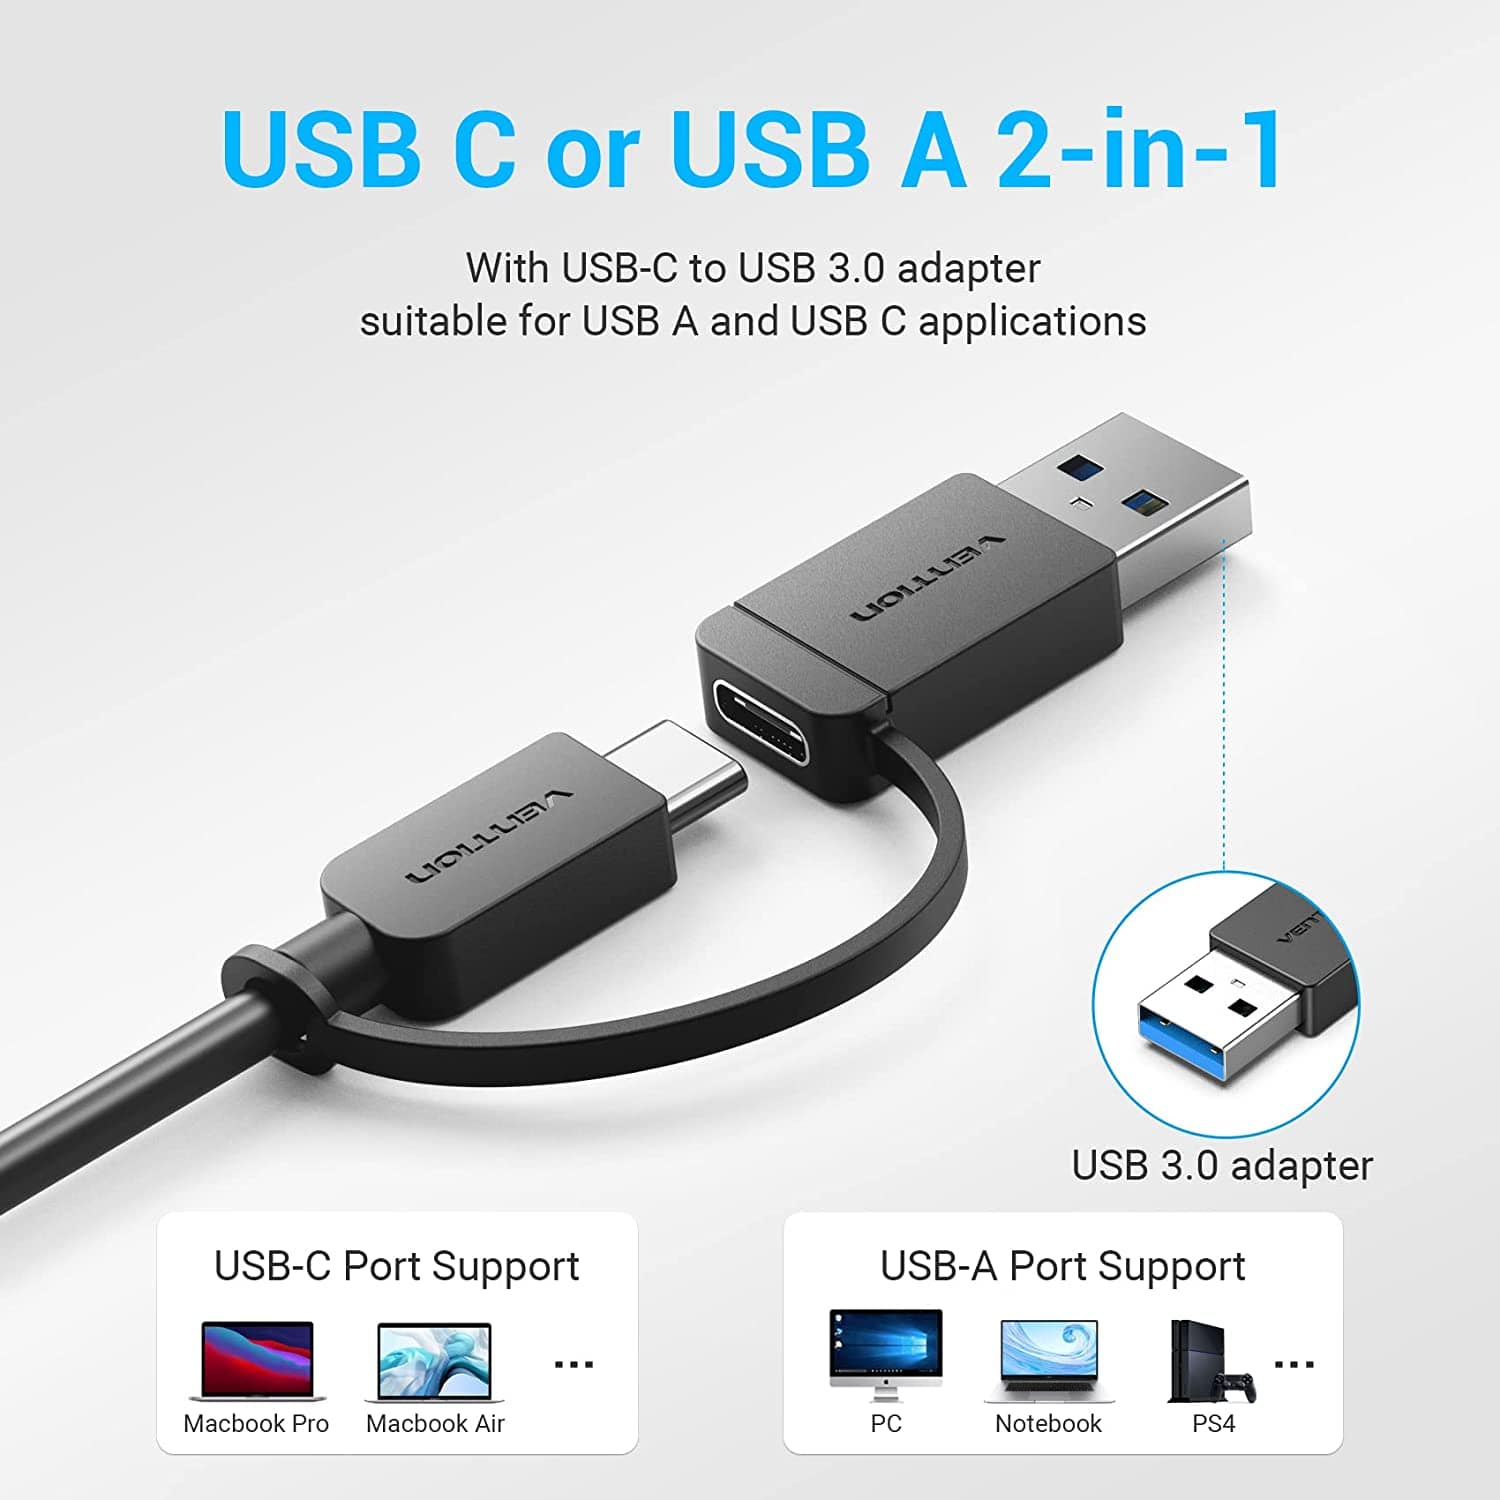 HUBBIES12B 4-Port USB 3.2 Gen 1 Hub, USB-C x 2, USB-A x 2, Aluminum Case -  Conceptronic